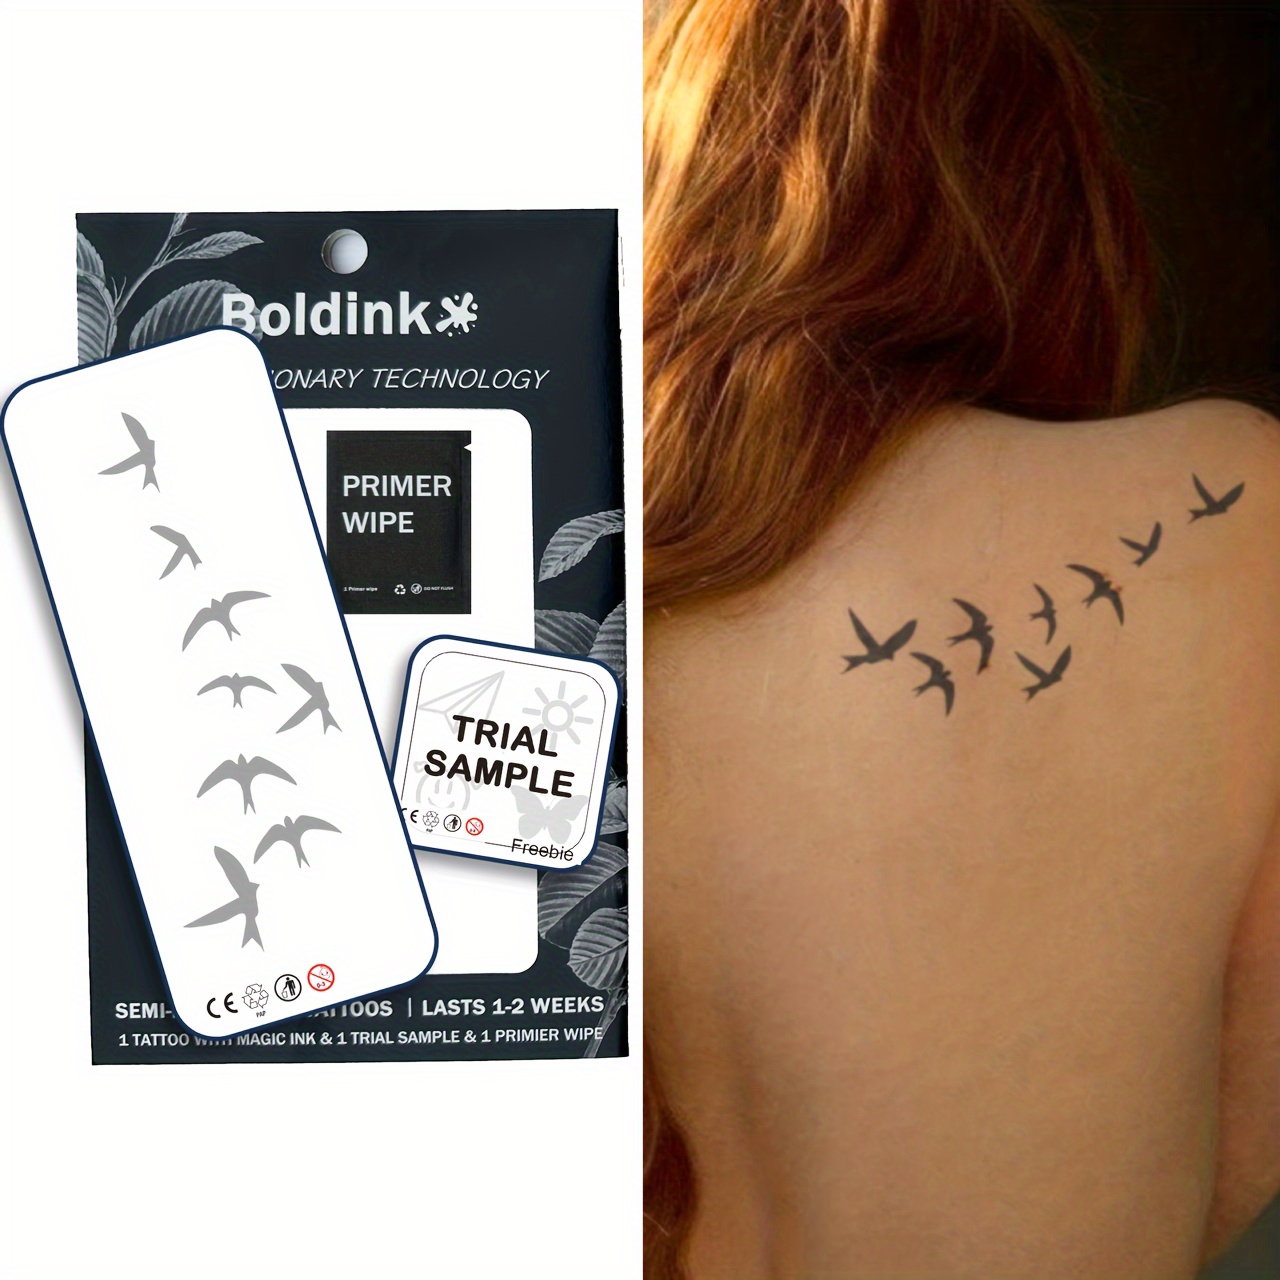 

Boldink Revolutionary Technology Tattoos, Semi-permanent Tattoos, Birds, Geese, Temporary Tattoos, Fake Tattoos, Water-resistant, Authentic Tattoo Look, Plant-based, Tattoo, C010